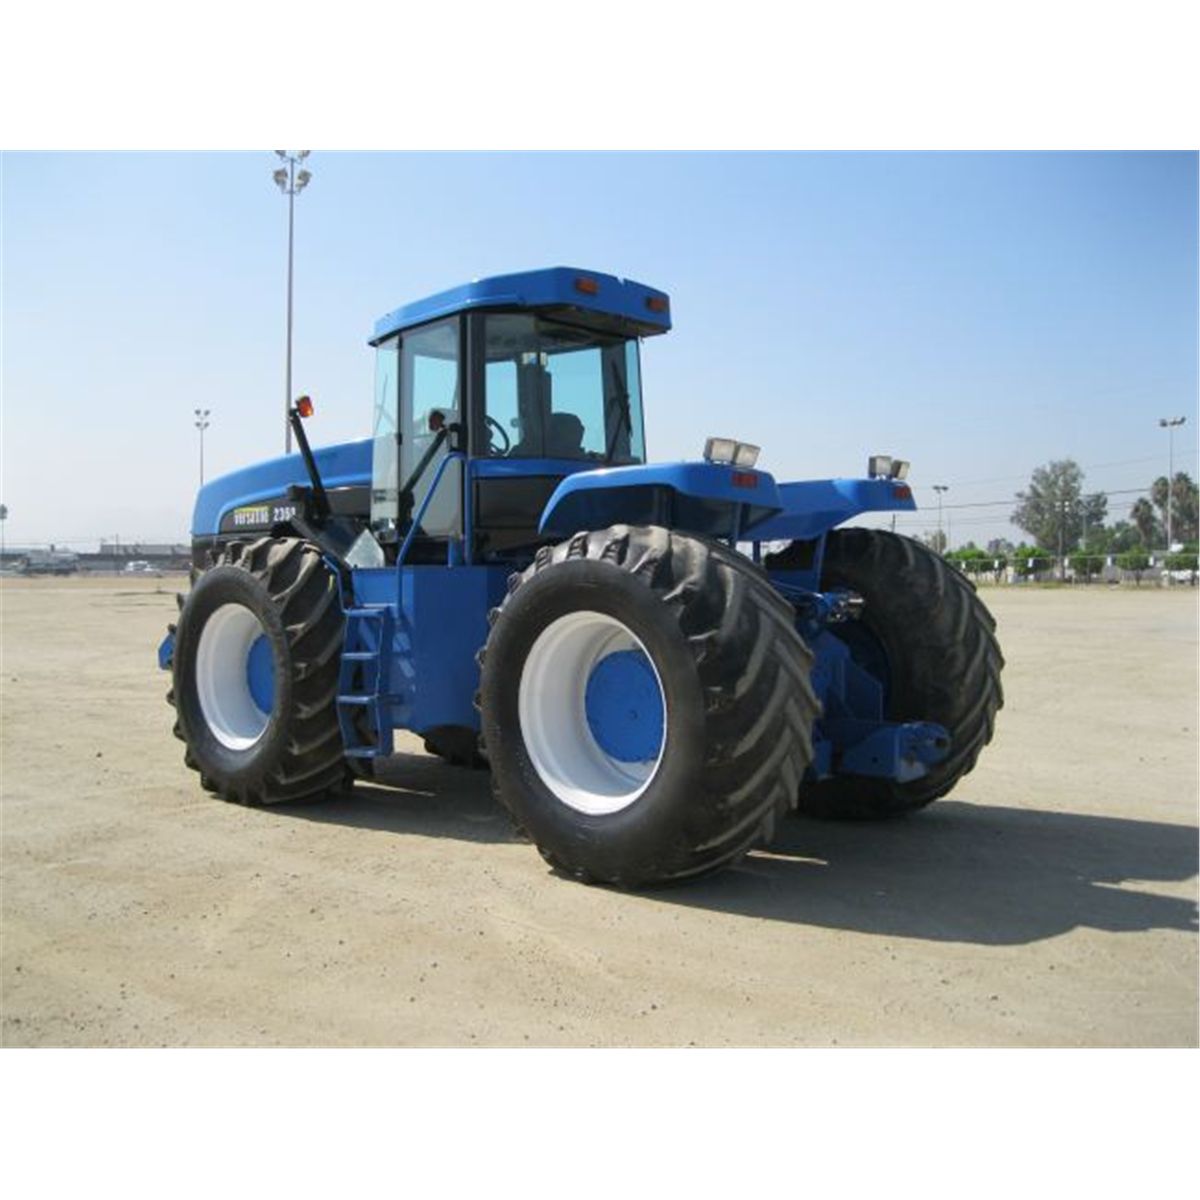 Image 4 : 2002 Buhler Versatile 2360 4x4 Ag Tractor